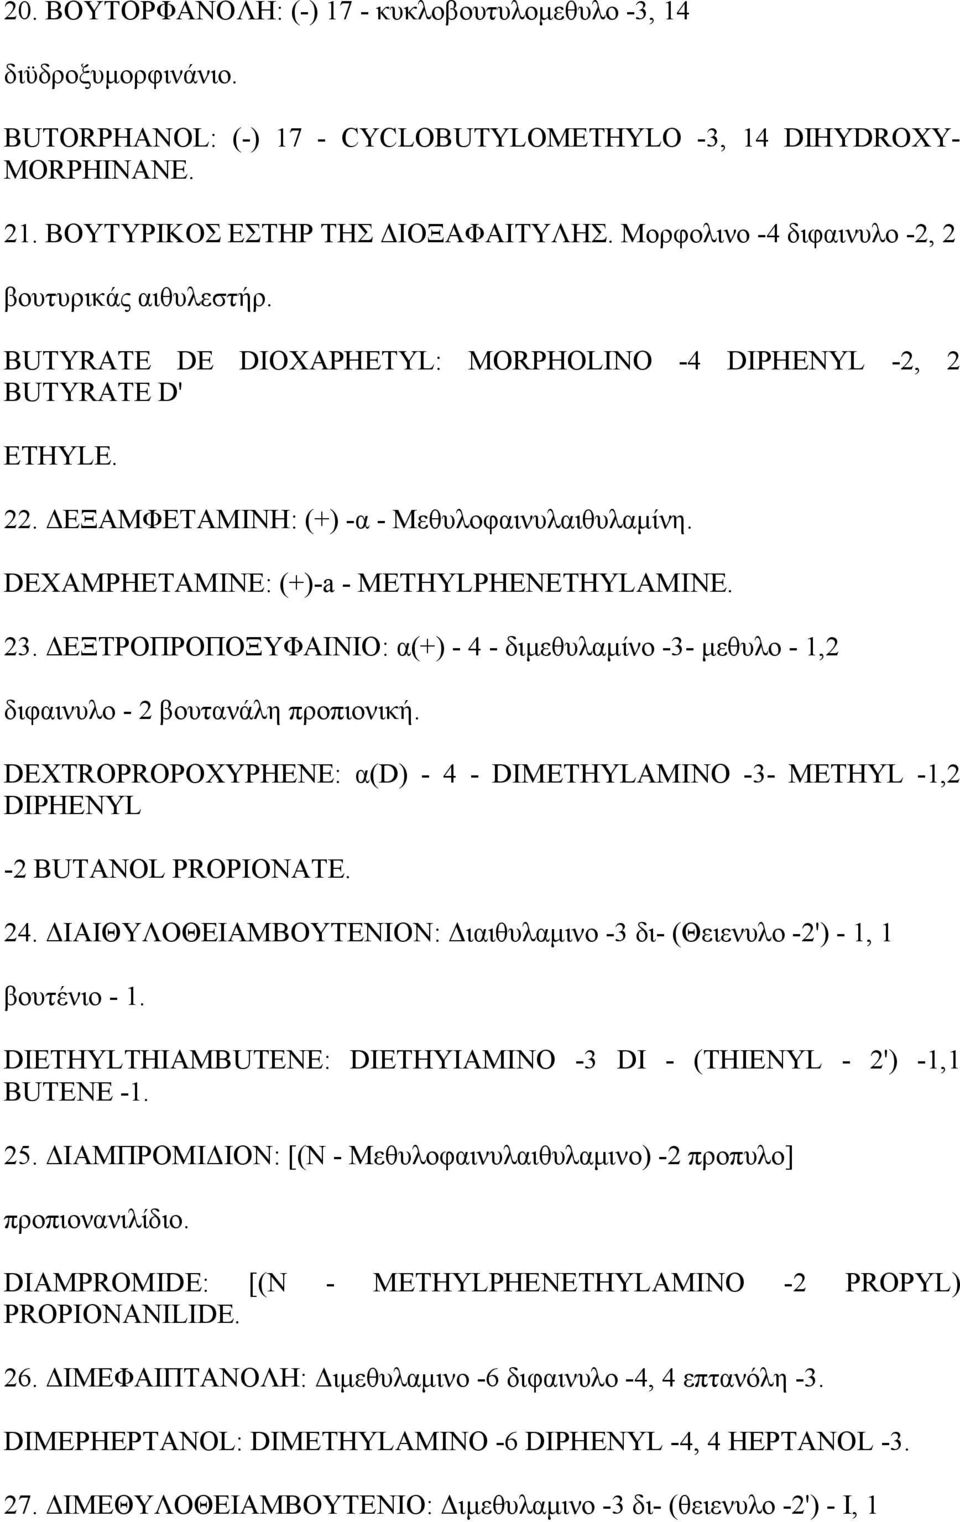 DΕΧΑΜΡΗΕΤΑΜΙΝΕ: (+)-a - METHYLPHENETHYLAMINE. 23. ΔΕΞΤΡΟΠΡΟΠΟΞΥΦΑΙΝΙΟ: α(+) - 4 - διμεθυλαμίνο -3- μεθυλο - 1,2 διφαινυλο - 2 βουτανάλη προπιονική.